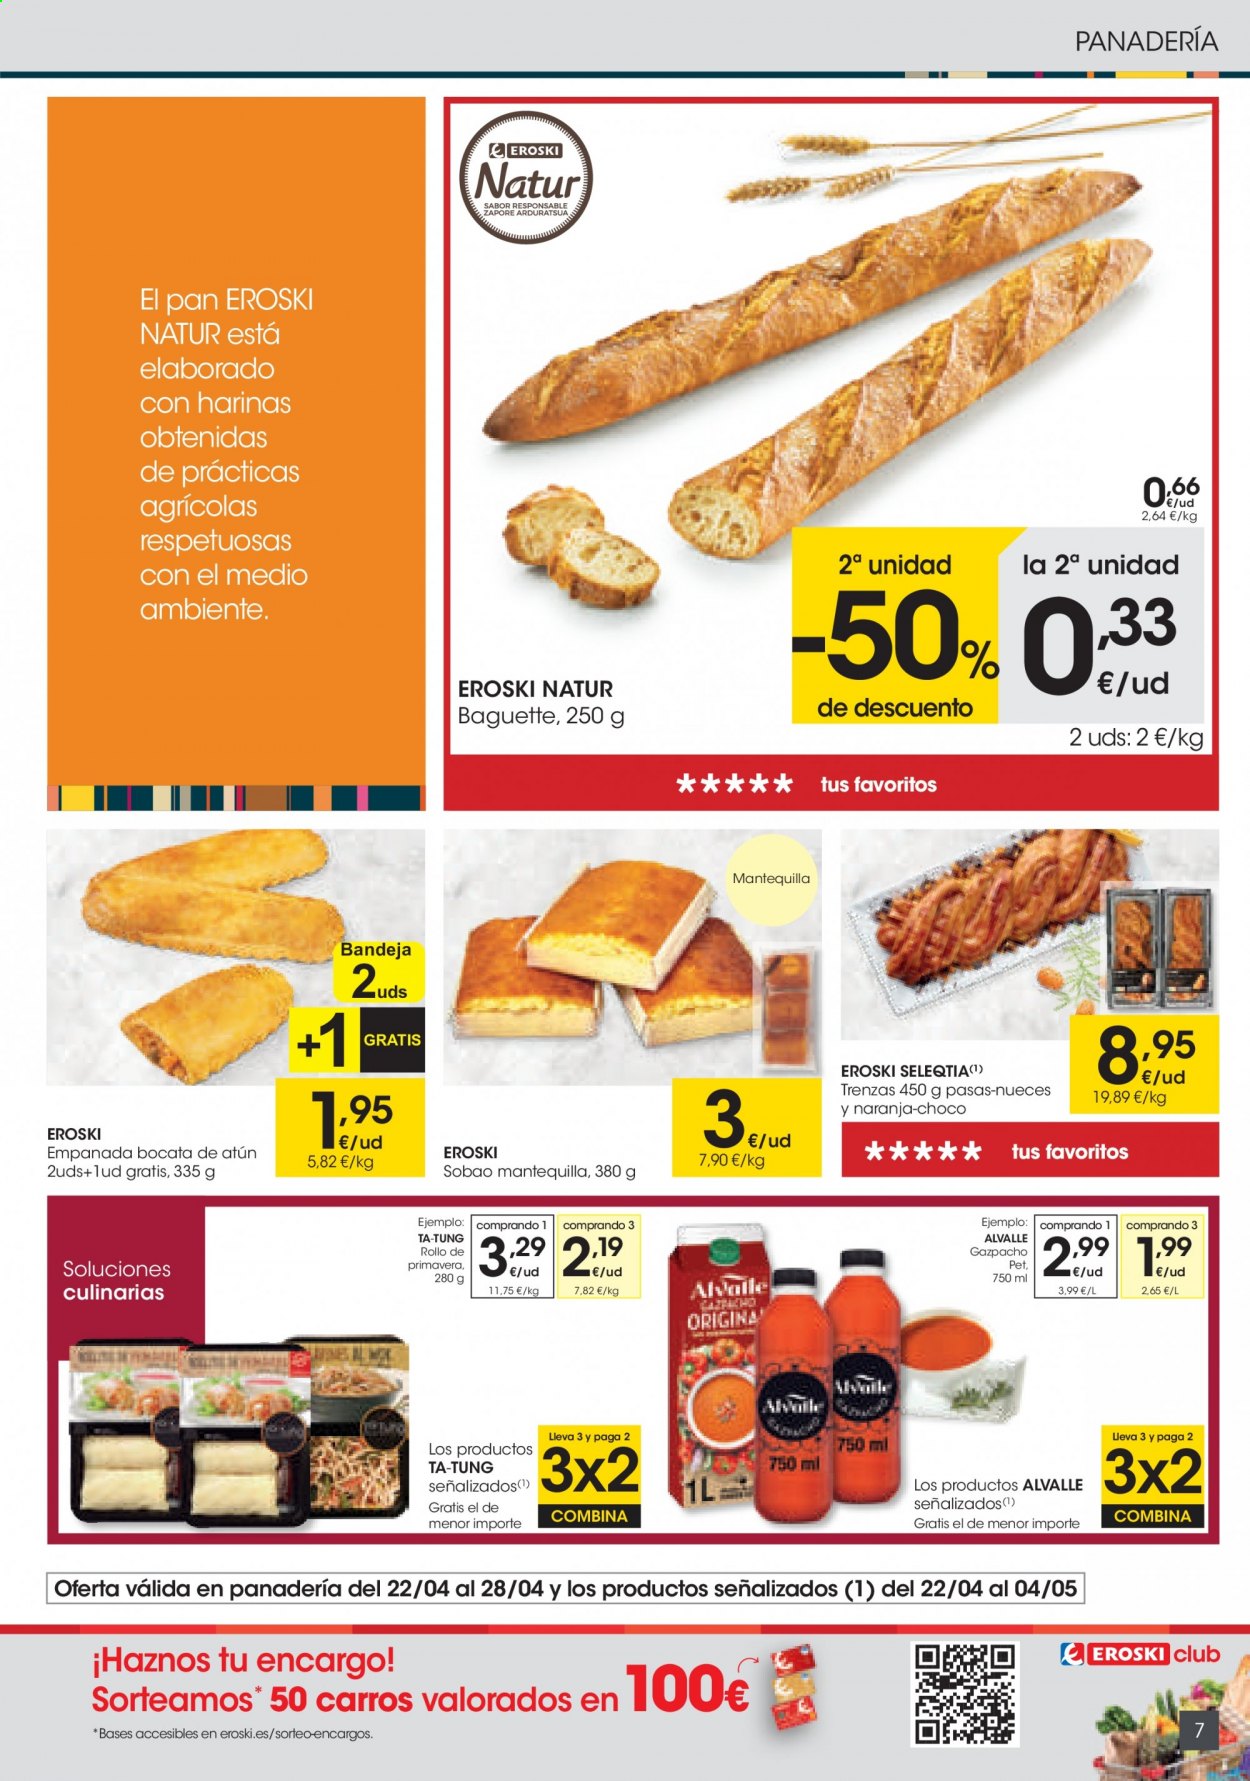 thumbnail - Folleto actual Eroski - 22/04/21 - 04/05/21 - Ventas - baguette, empanada, pan, mantequilla. Página 7.